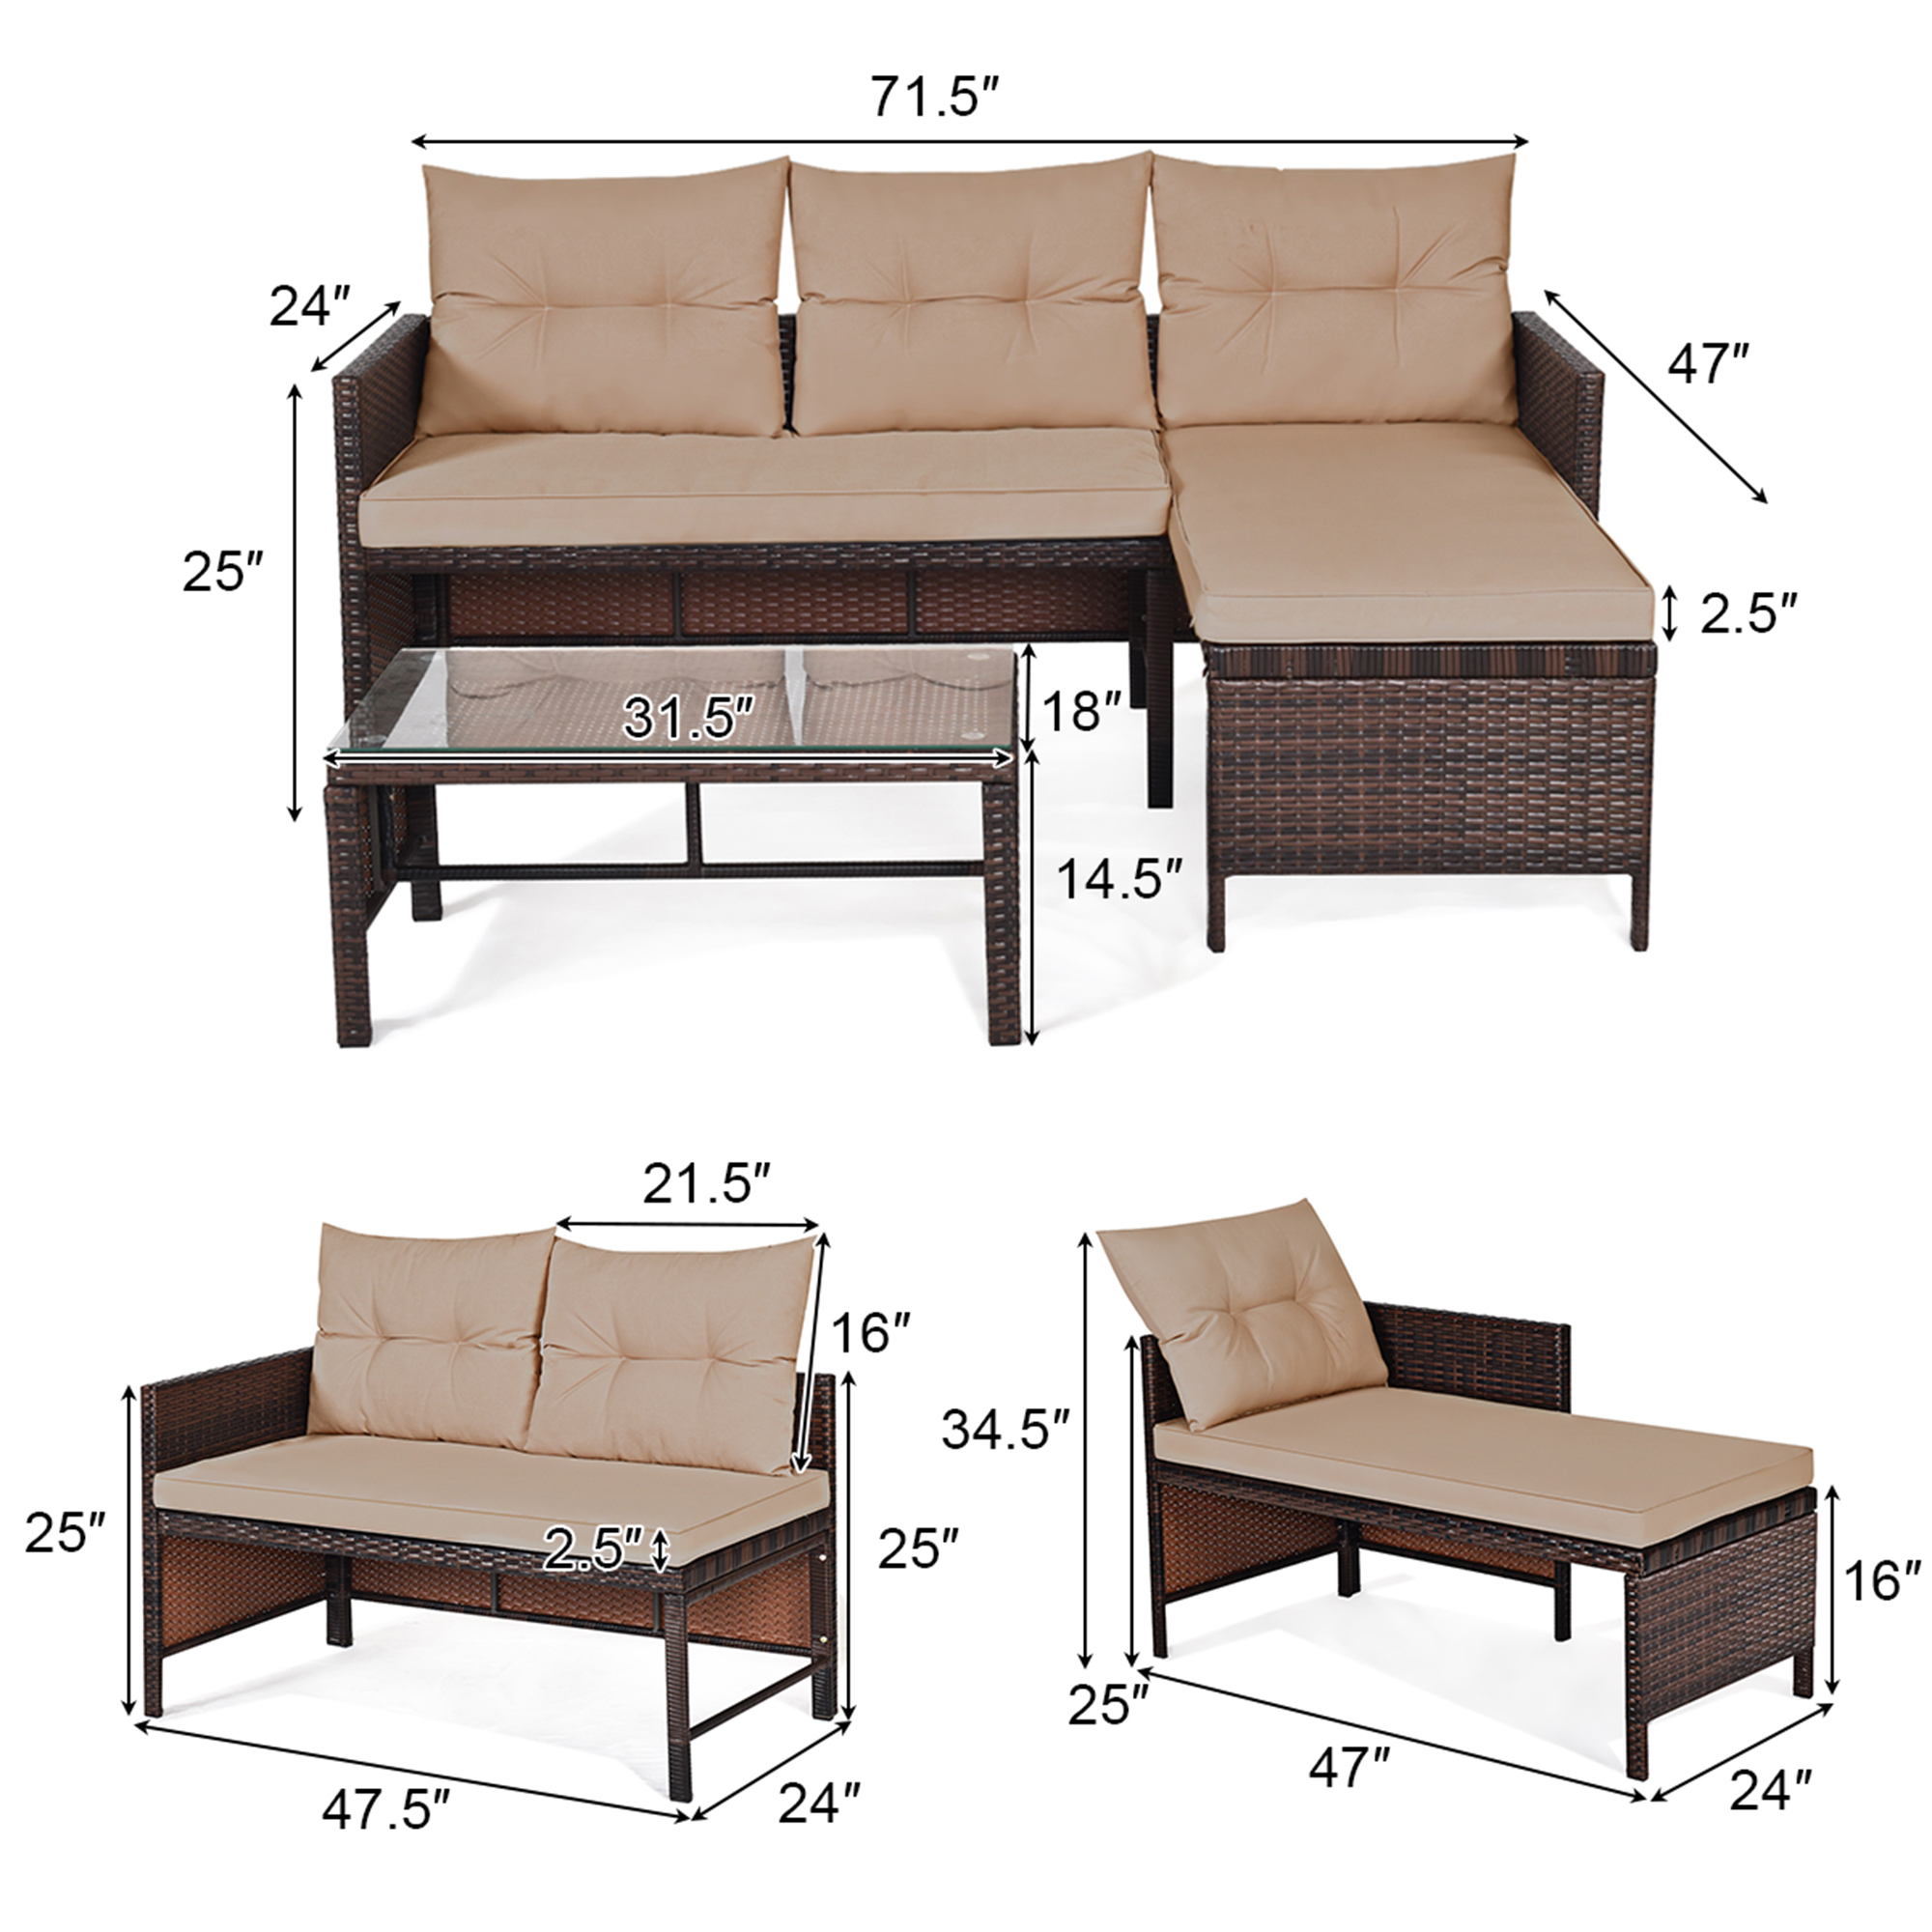 Costway 3PC Patio Sofa Set Outdoor Sectional Conversation Set Rattan Wicker - image 5 of 9